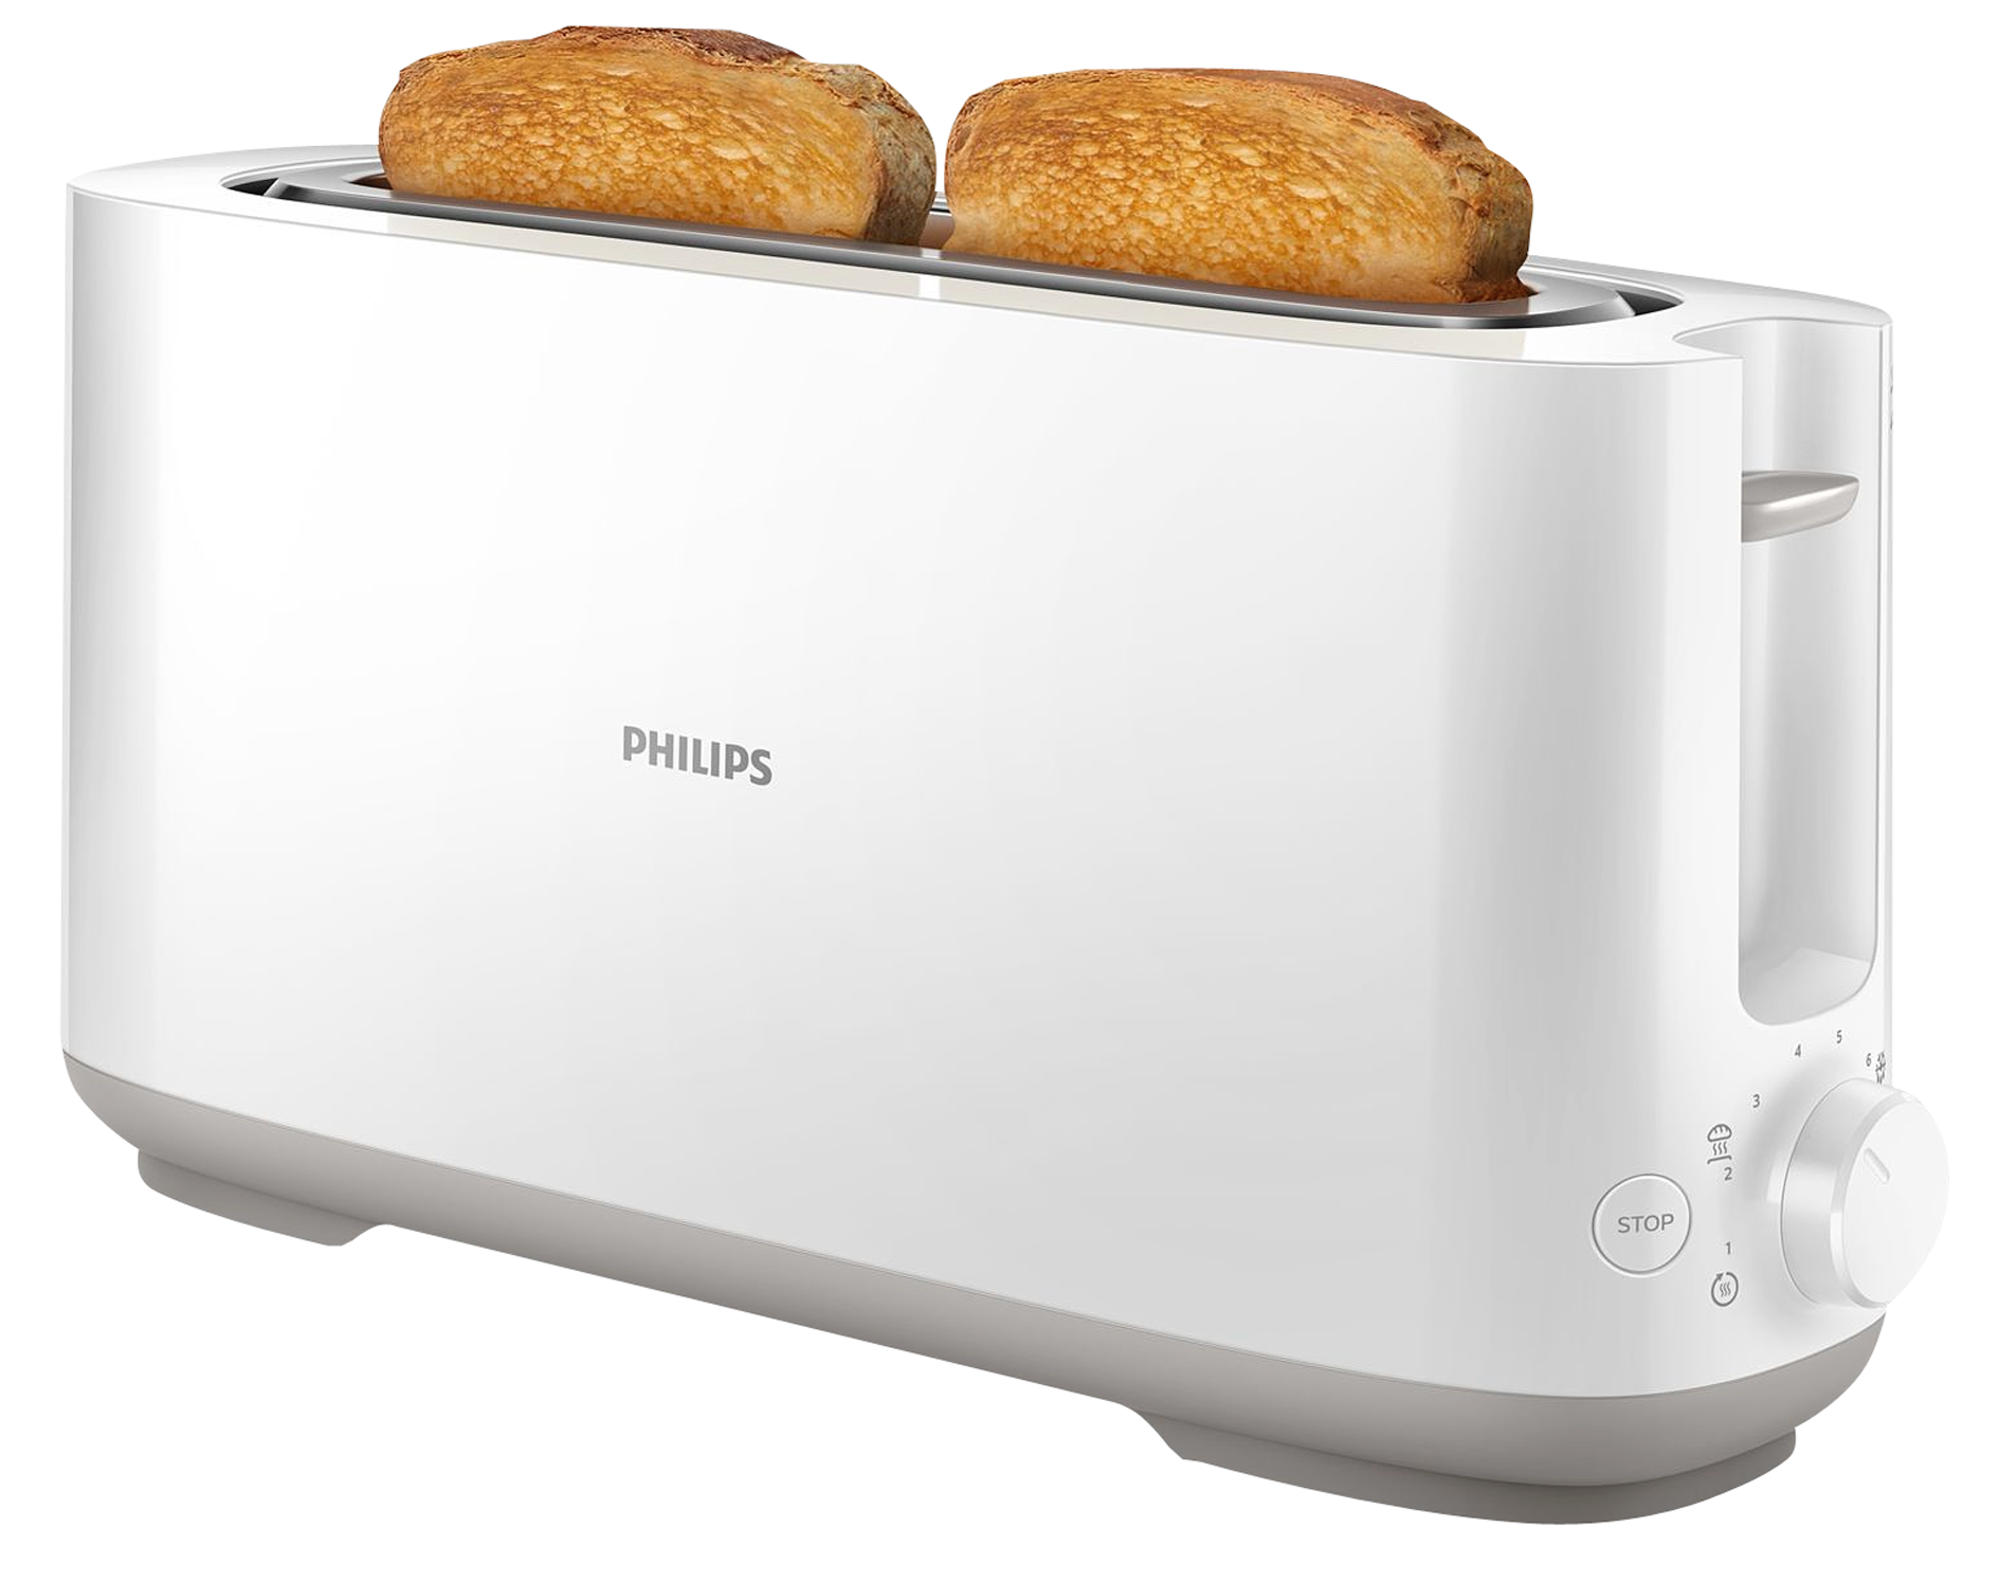 Tostadora - Philips HD2590/00, Capacidad para 2 tostadas, 8 ajustes, Blanco